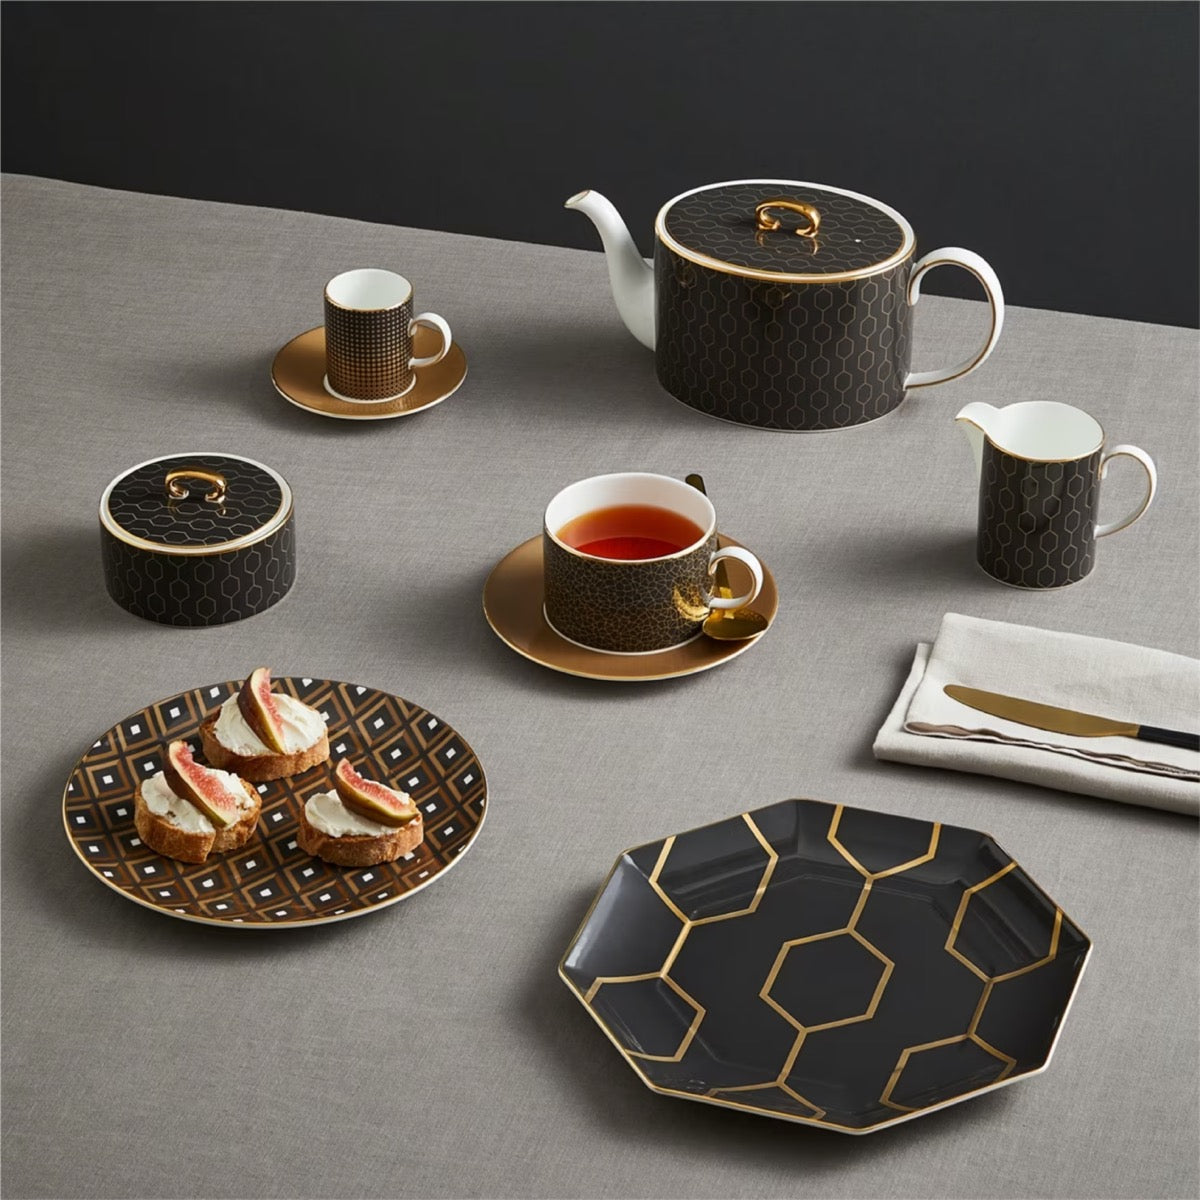 Luxury tea plate set for four